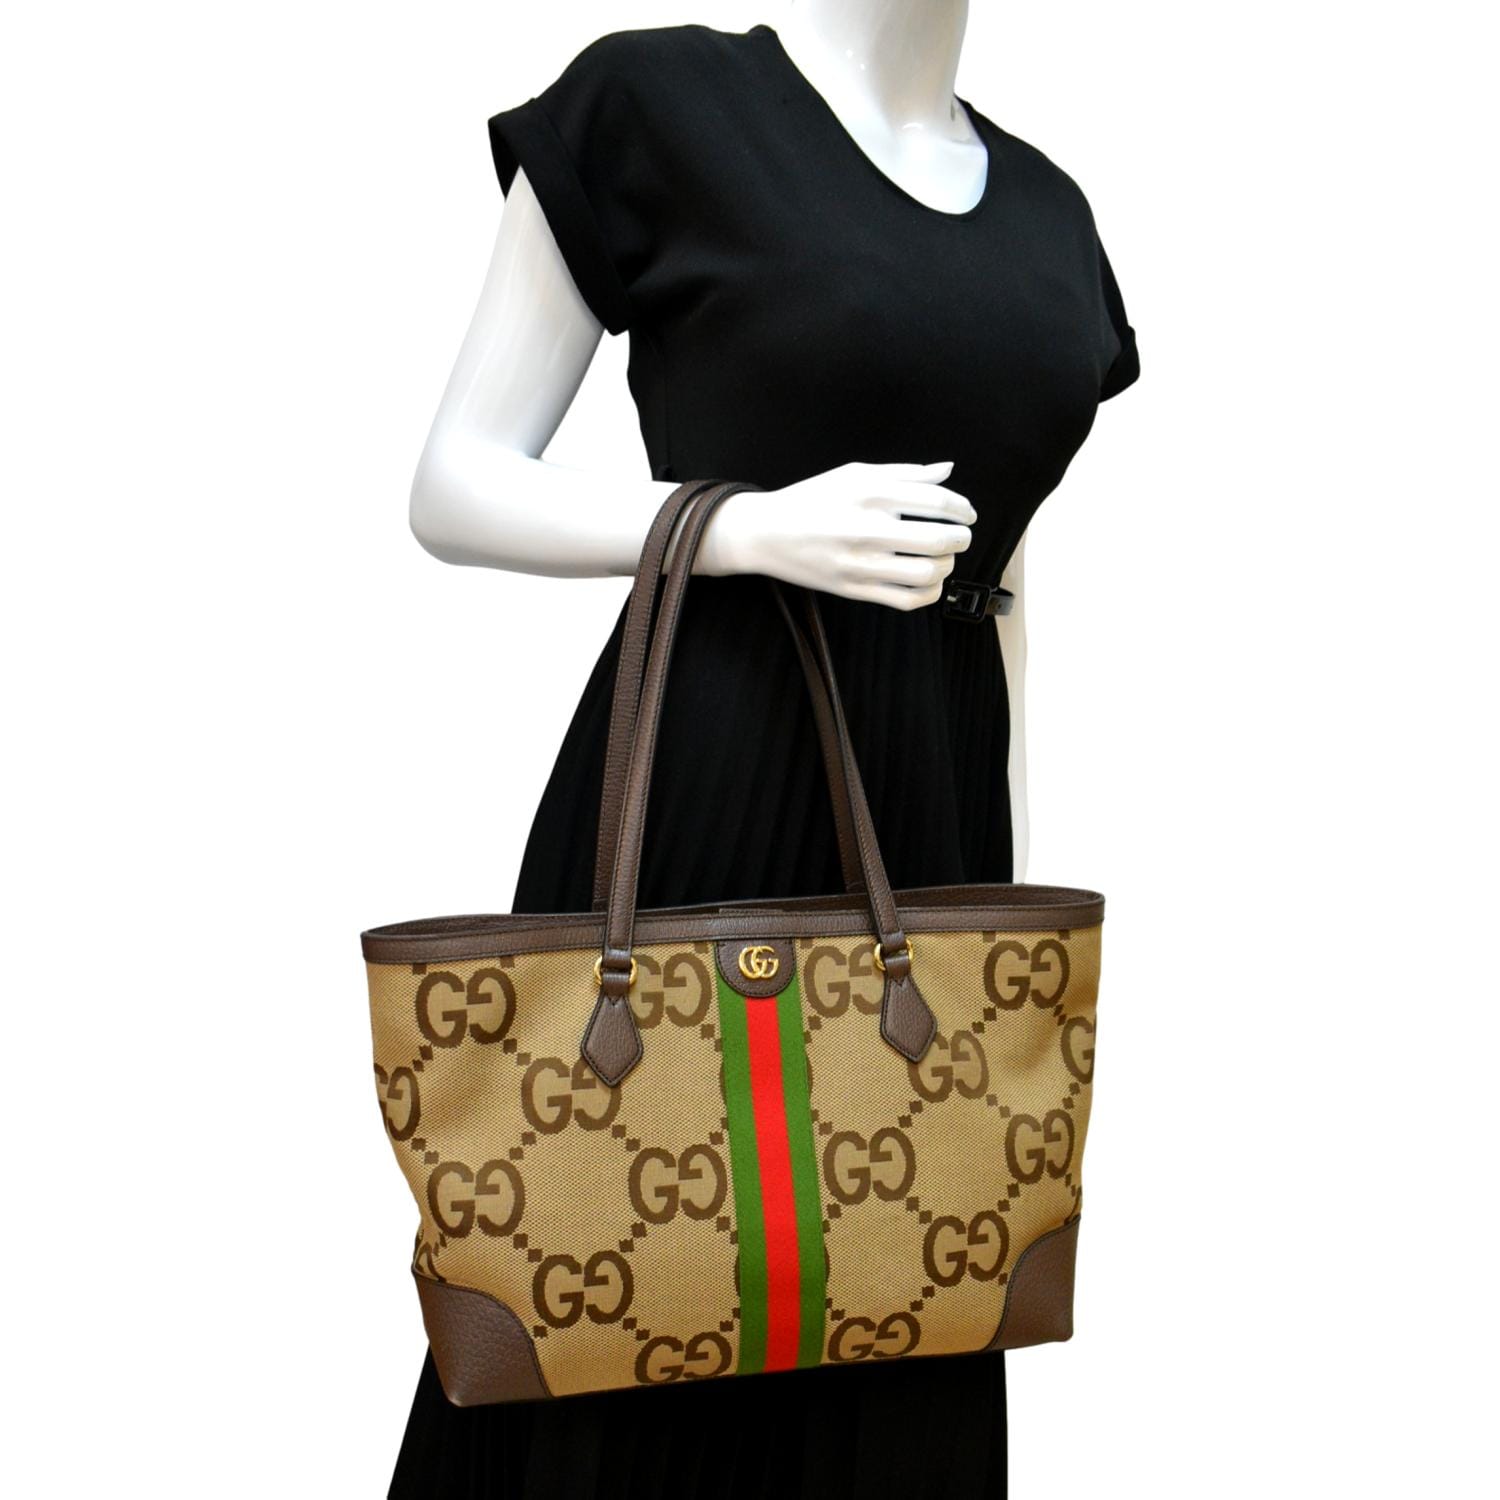 Gucci Ophidia Jumbo GG Small Shoulder Bag